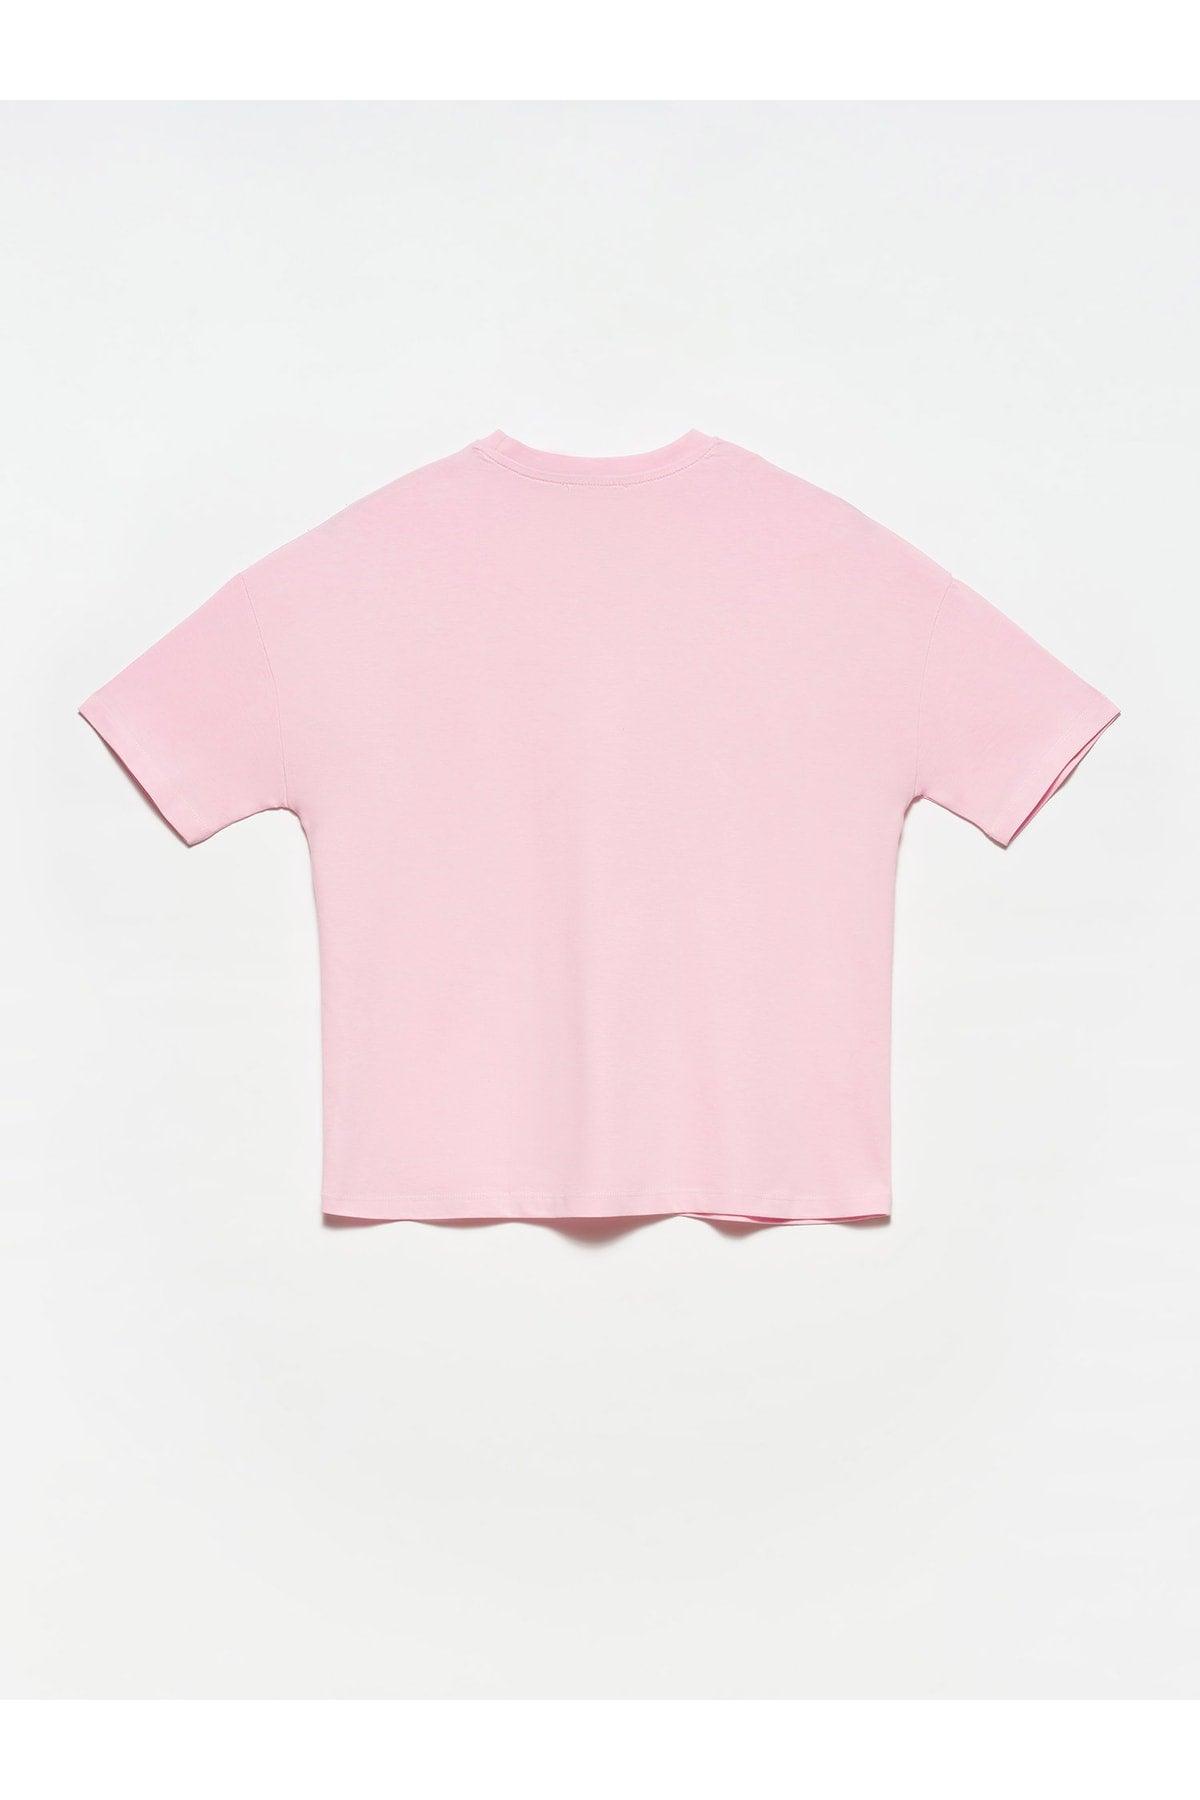 3683 Basic T-shirt Light Pink - Swordslife